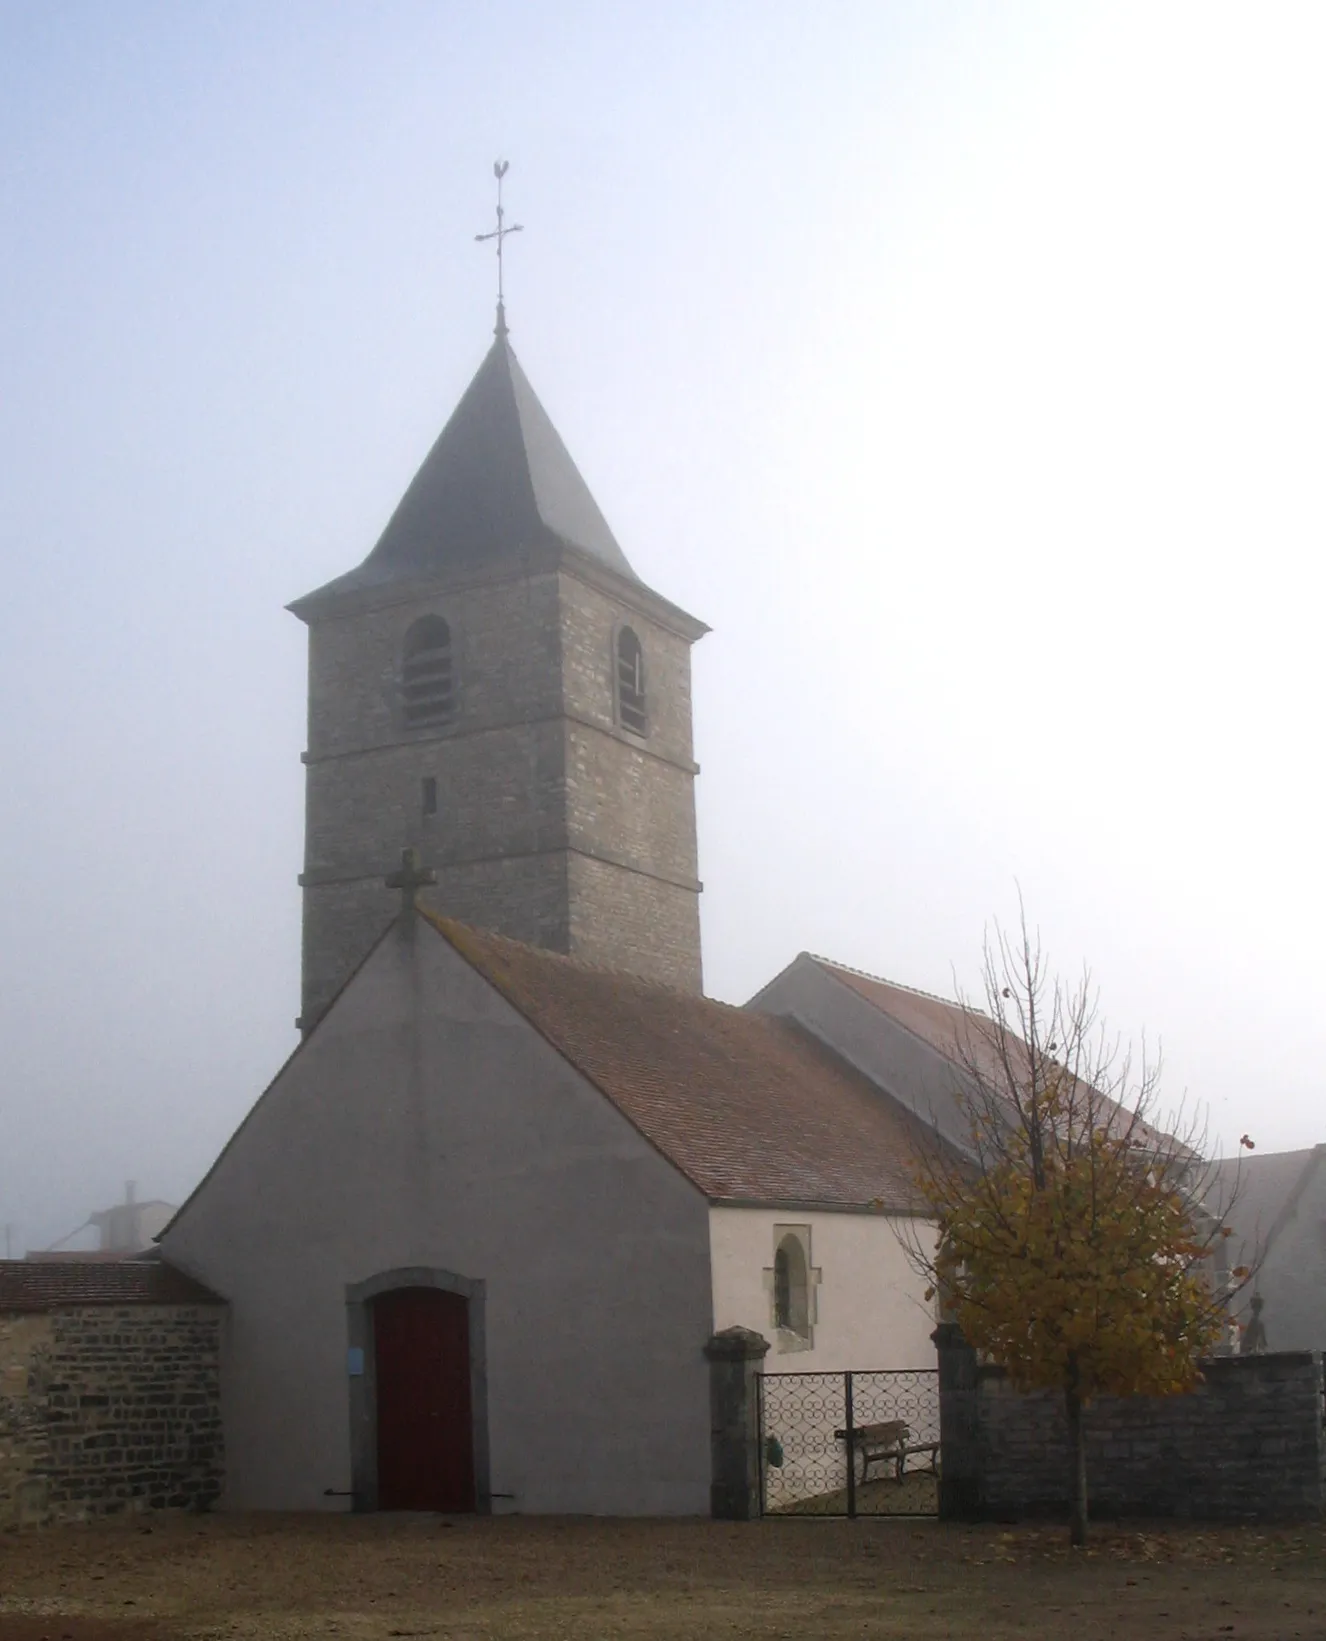 Photo showing: The Roman Catholic church of Pasilly, Yonne, France.